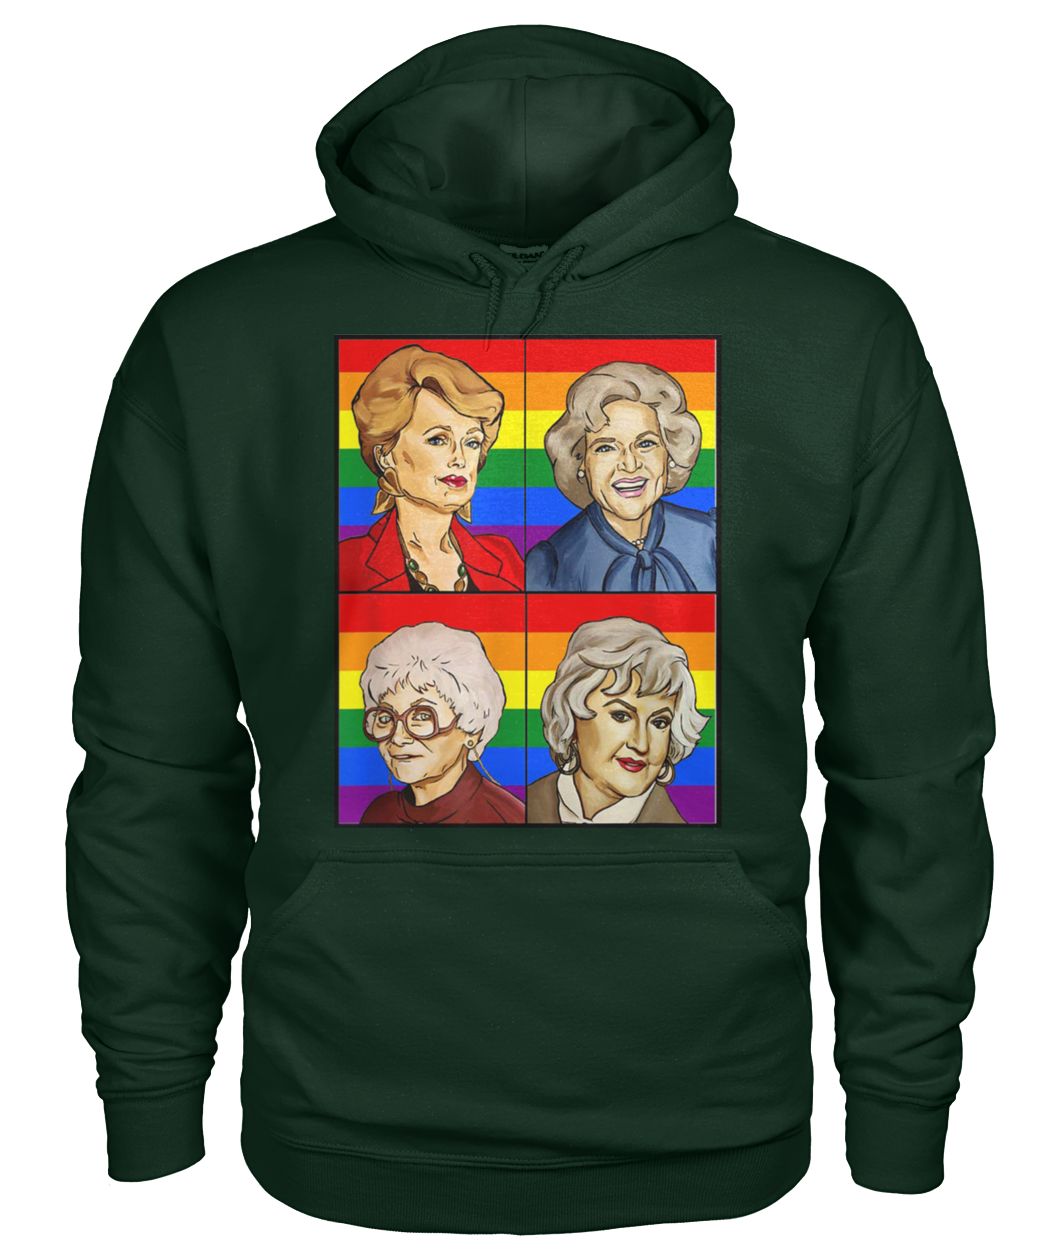 The golden friend girls lgbt pride rainbow flag gildan hoodie